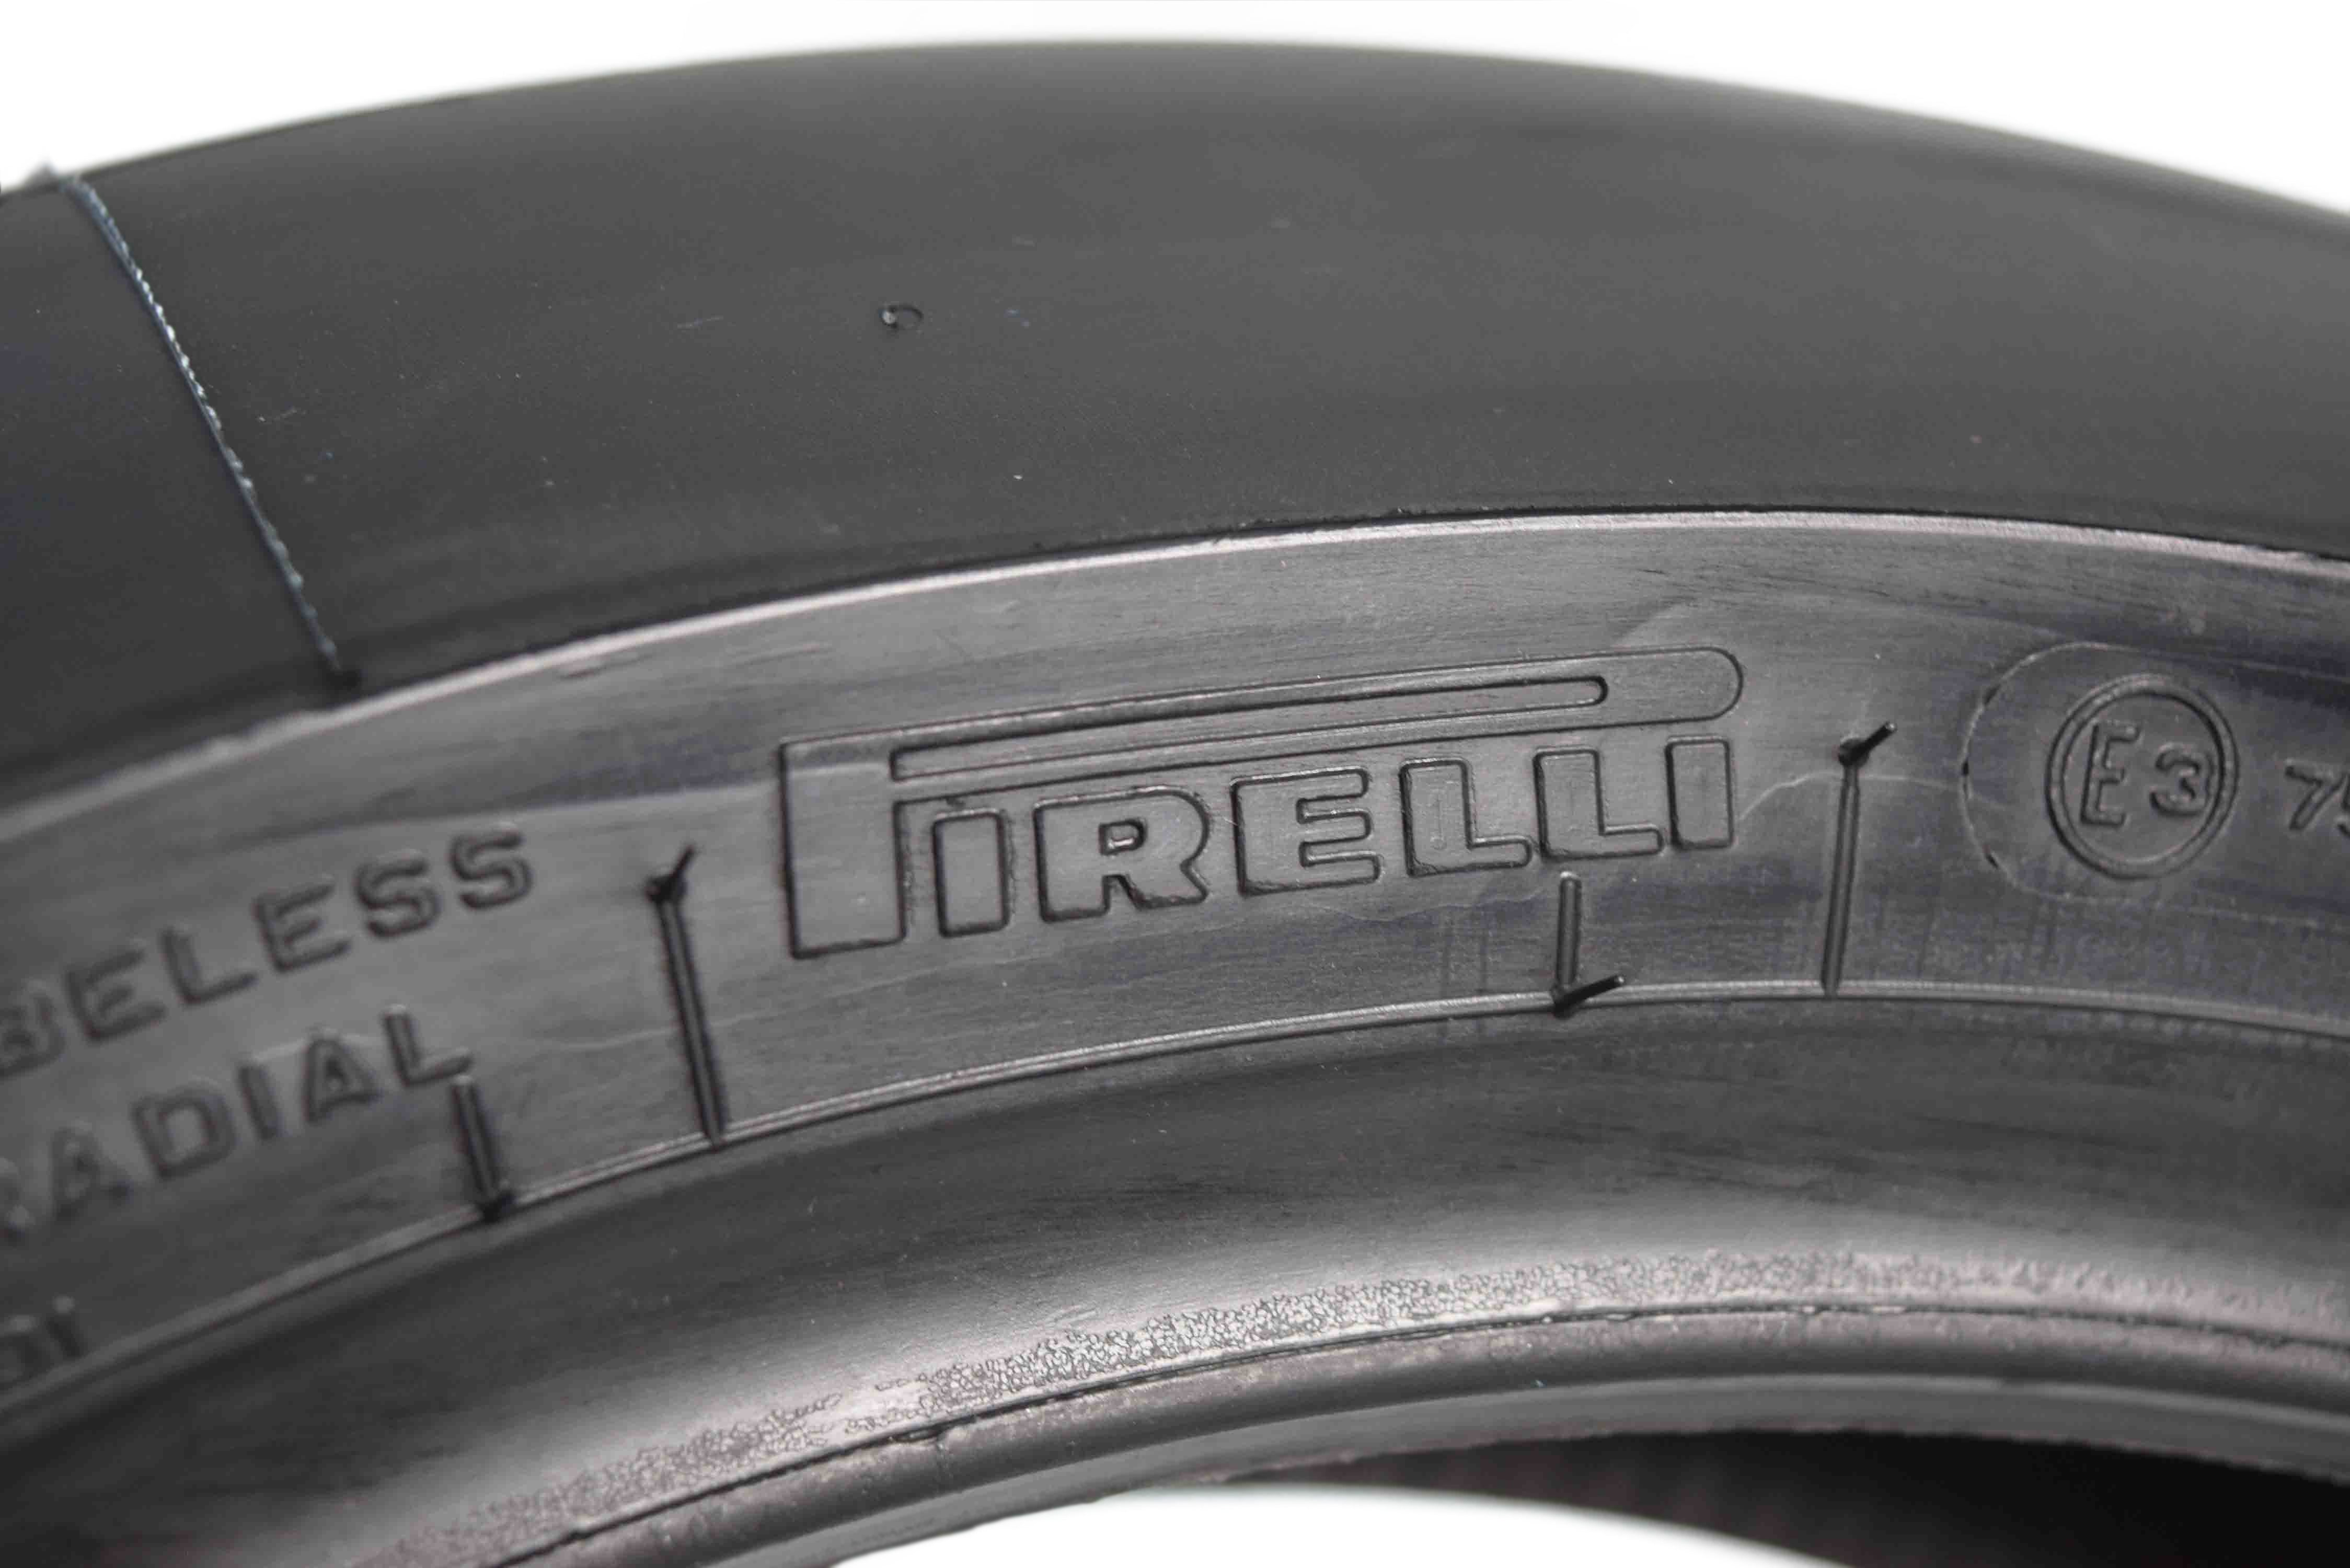 Pirelli Tire 180/55ZR17 SUPER CORSA V2 Radial Motorcycle Rear Tire 180/55-17